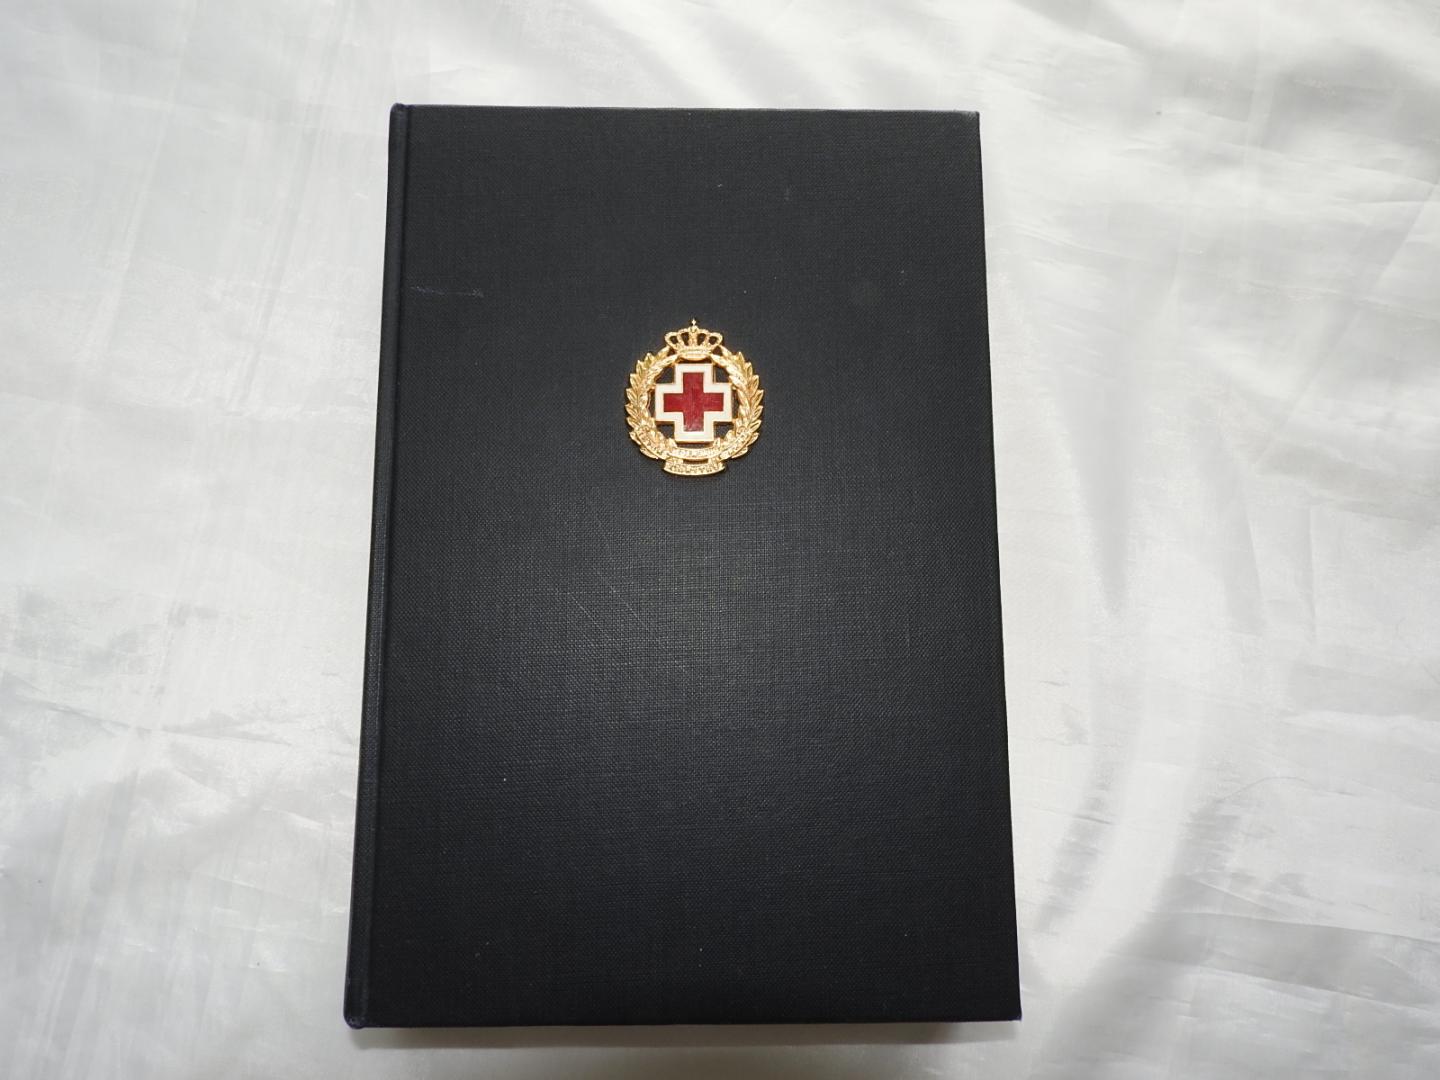 Verspyck, G.M. jonkheer Verspyk - Het Nederlandsche Roode Kruis (1867-1967) met orginele Goudgekleurde Insigne / Medailion op Voorzijde